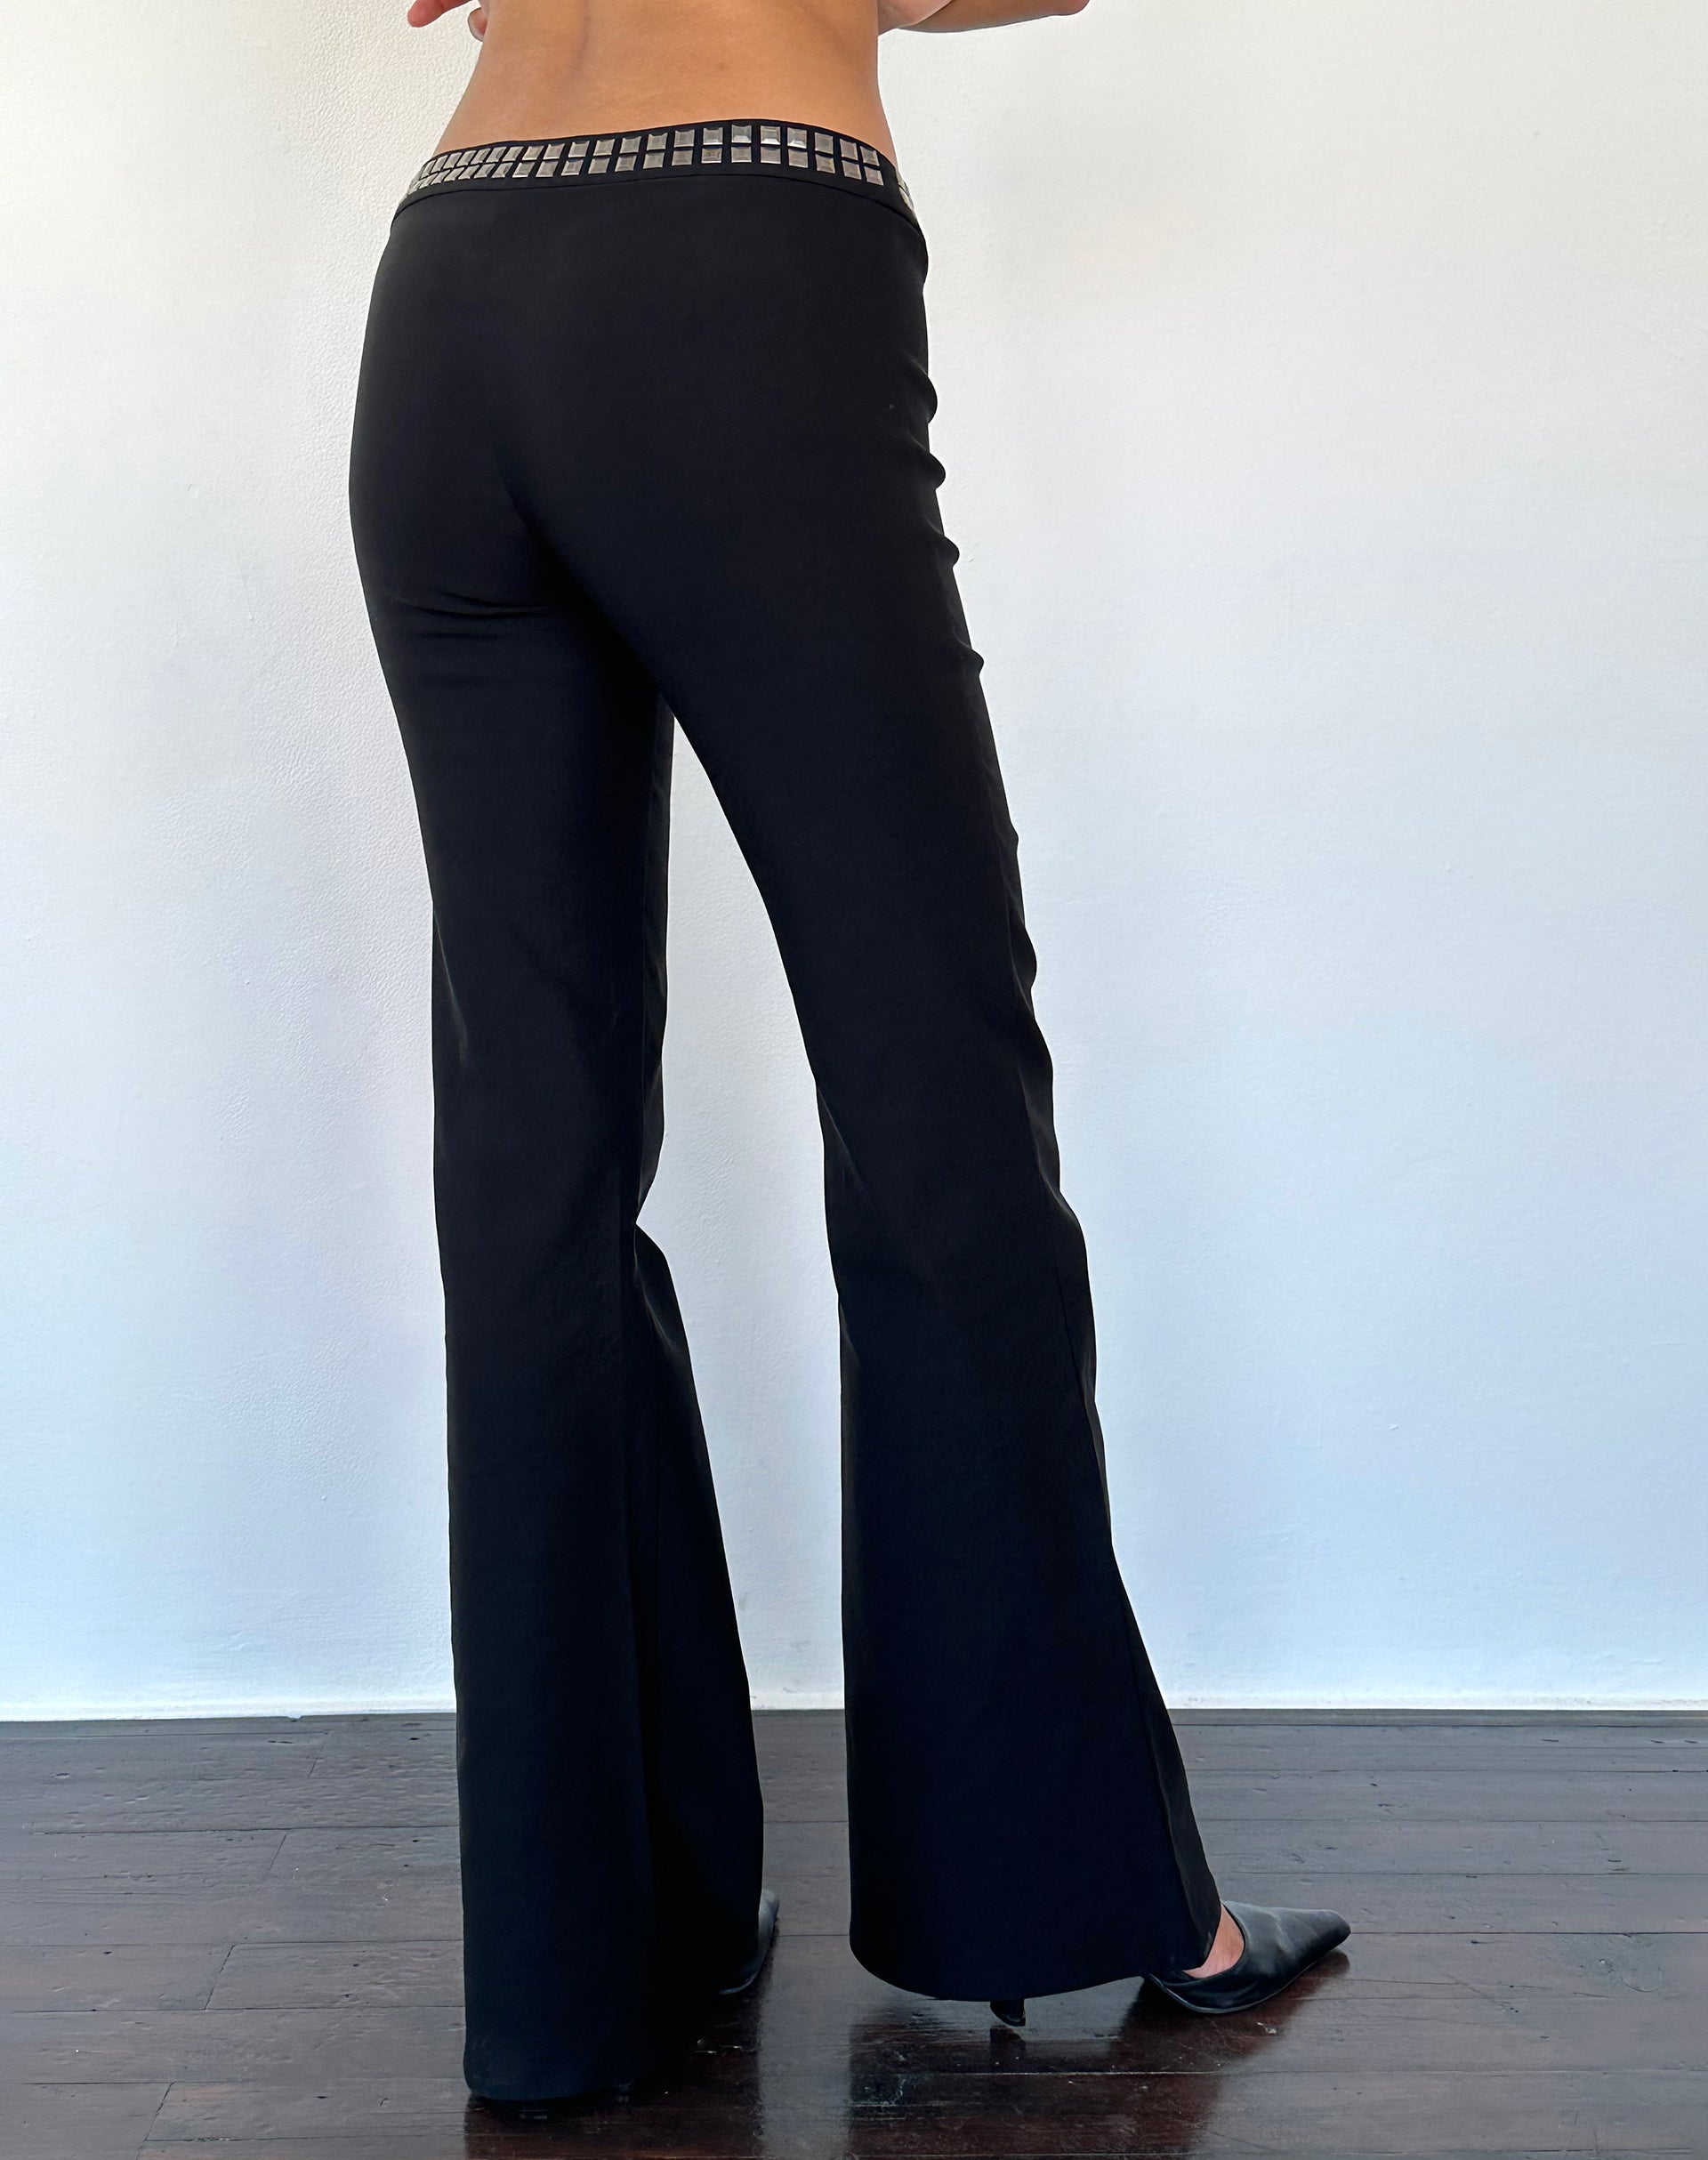 Imagen de Macias Studded Flared pantalones en negro Sastrería